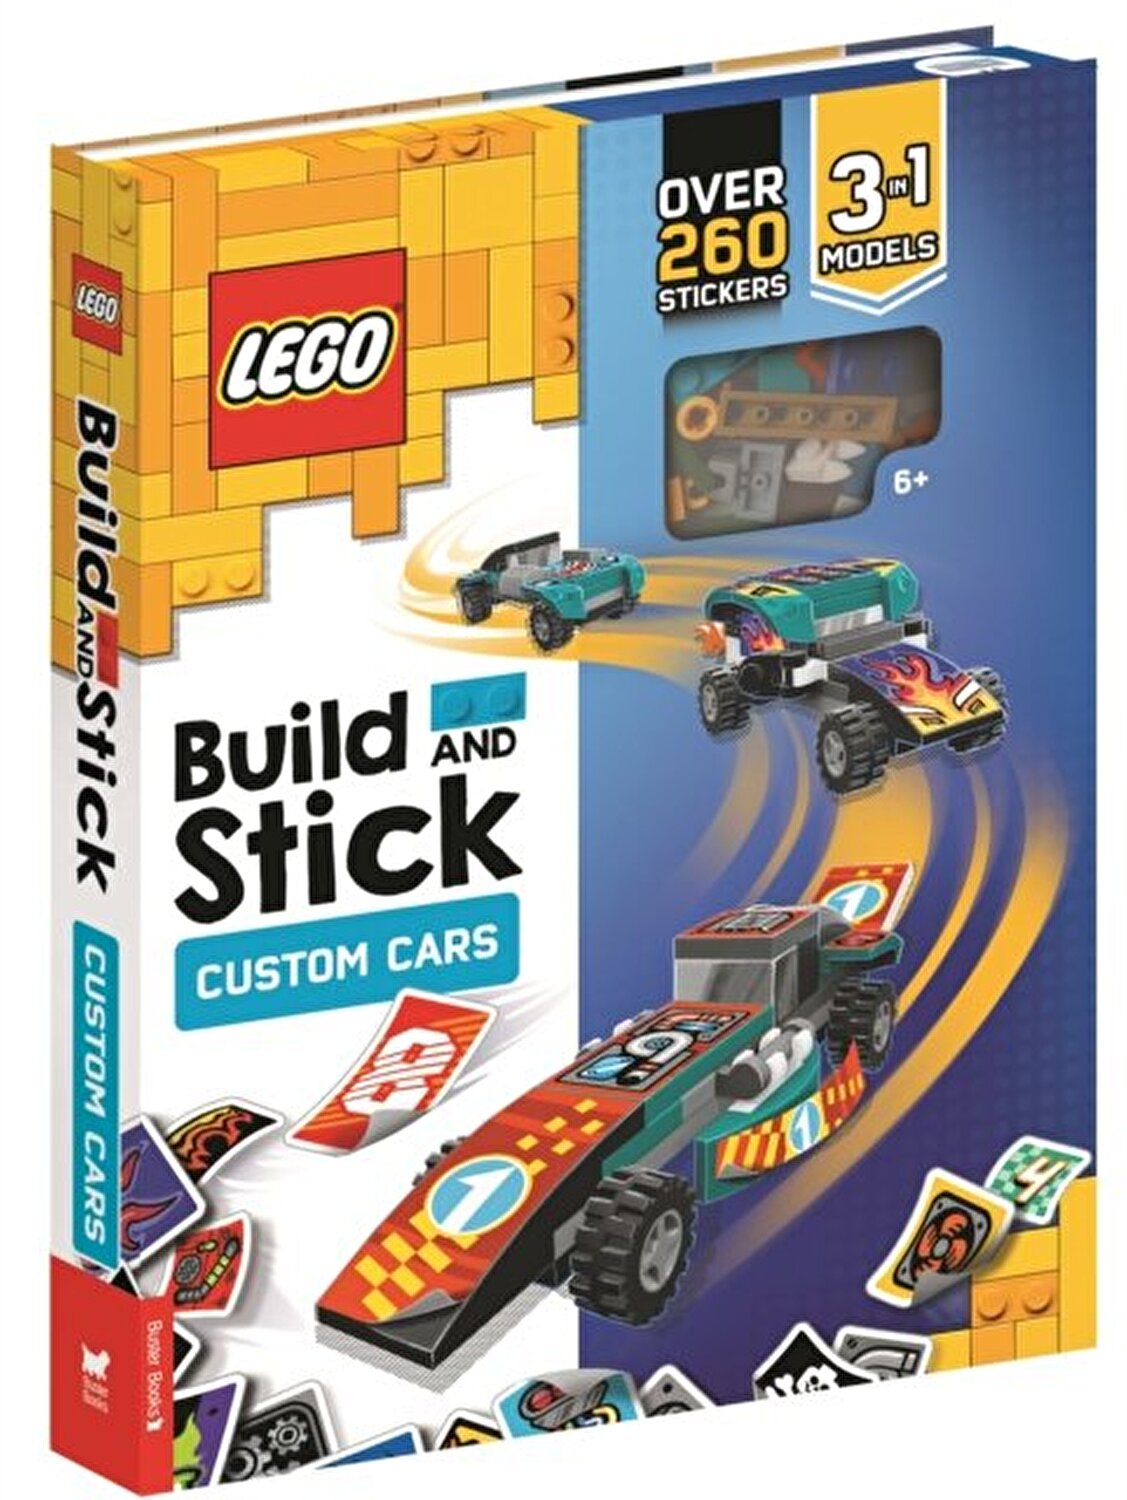 LEGO (R) Build and Stick: Custom Cars